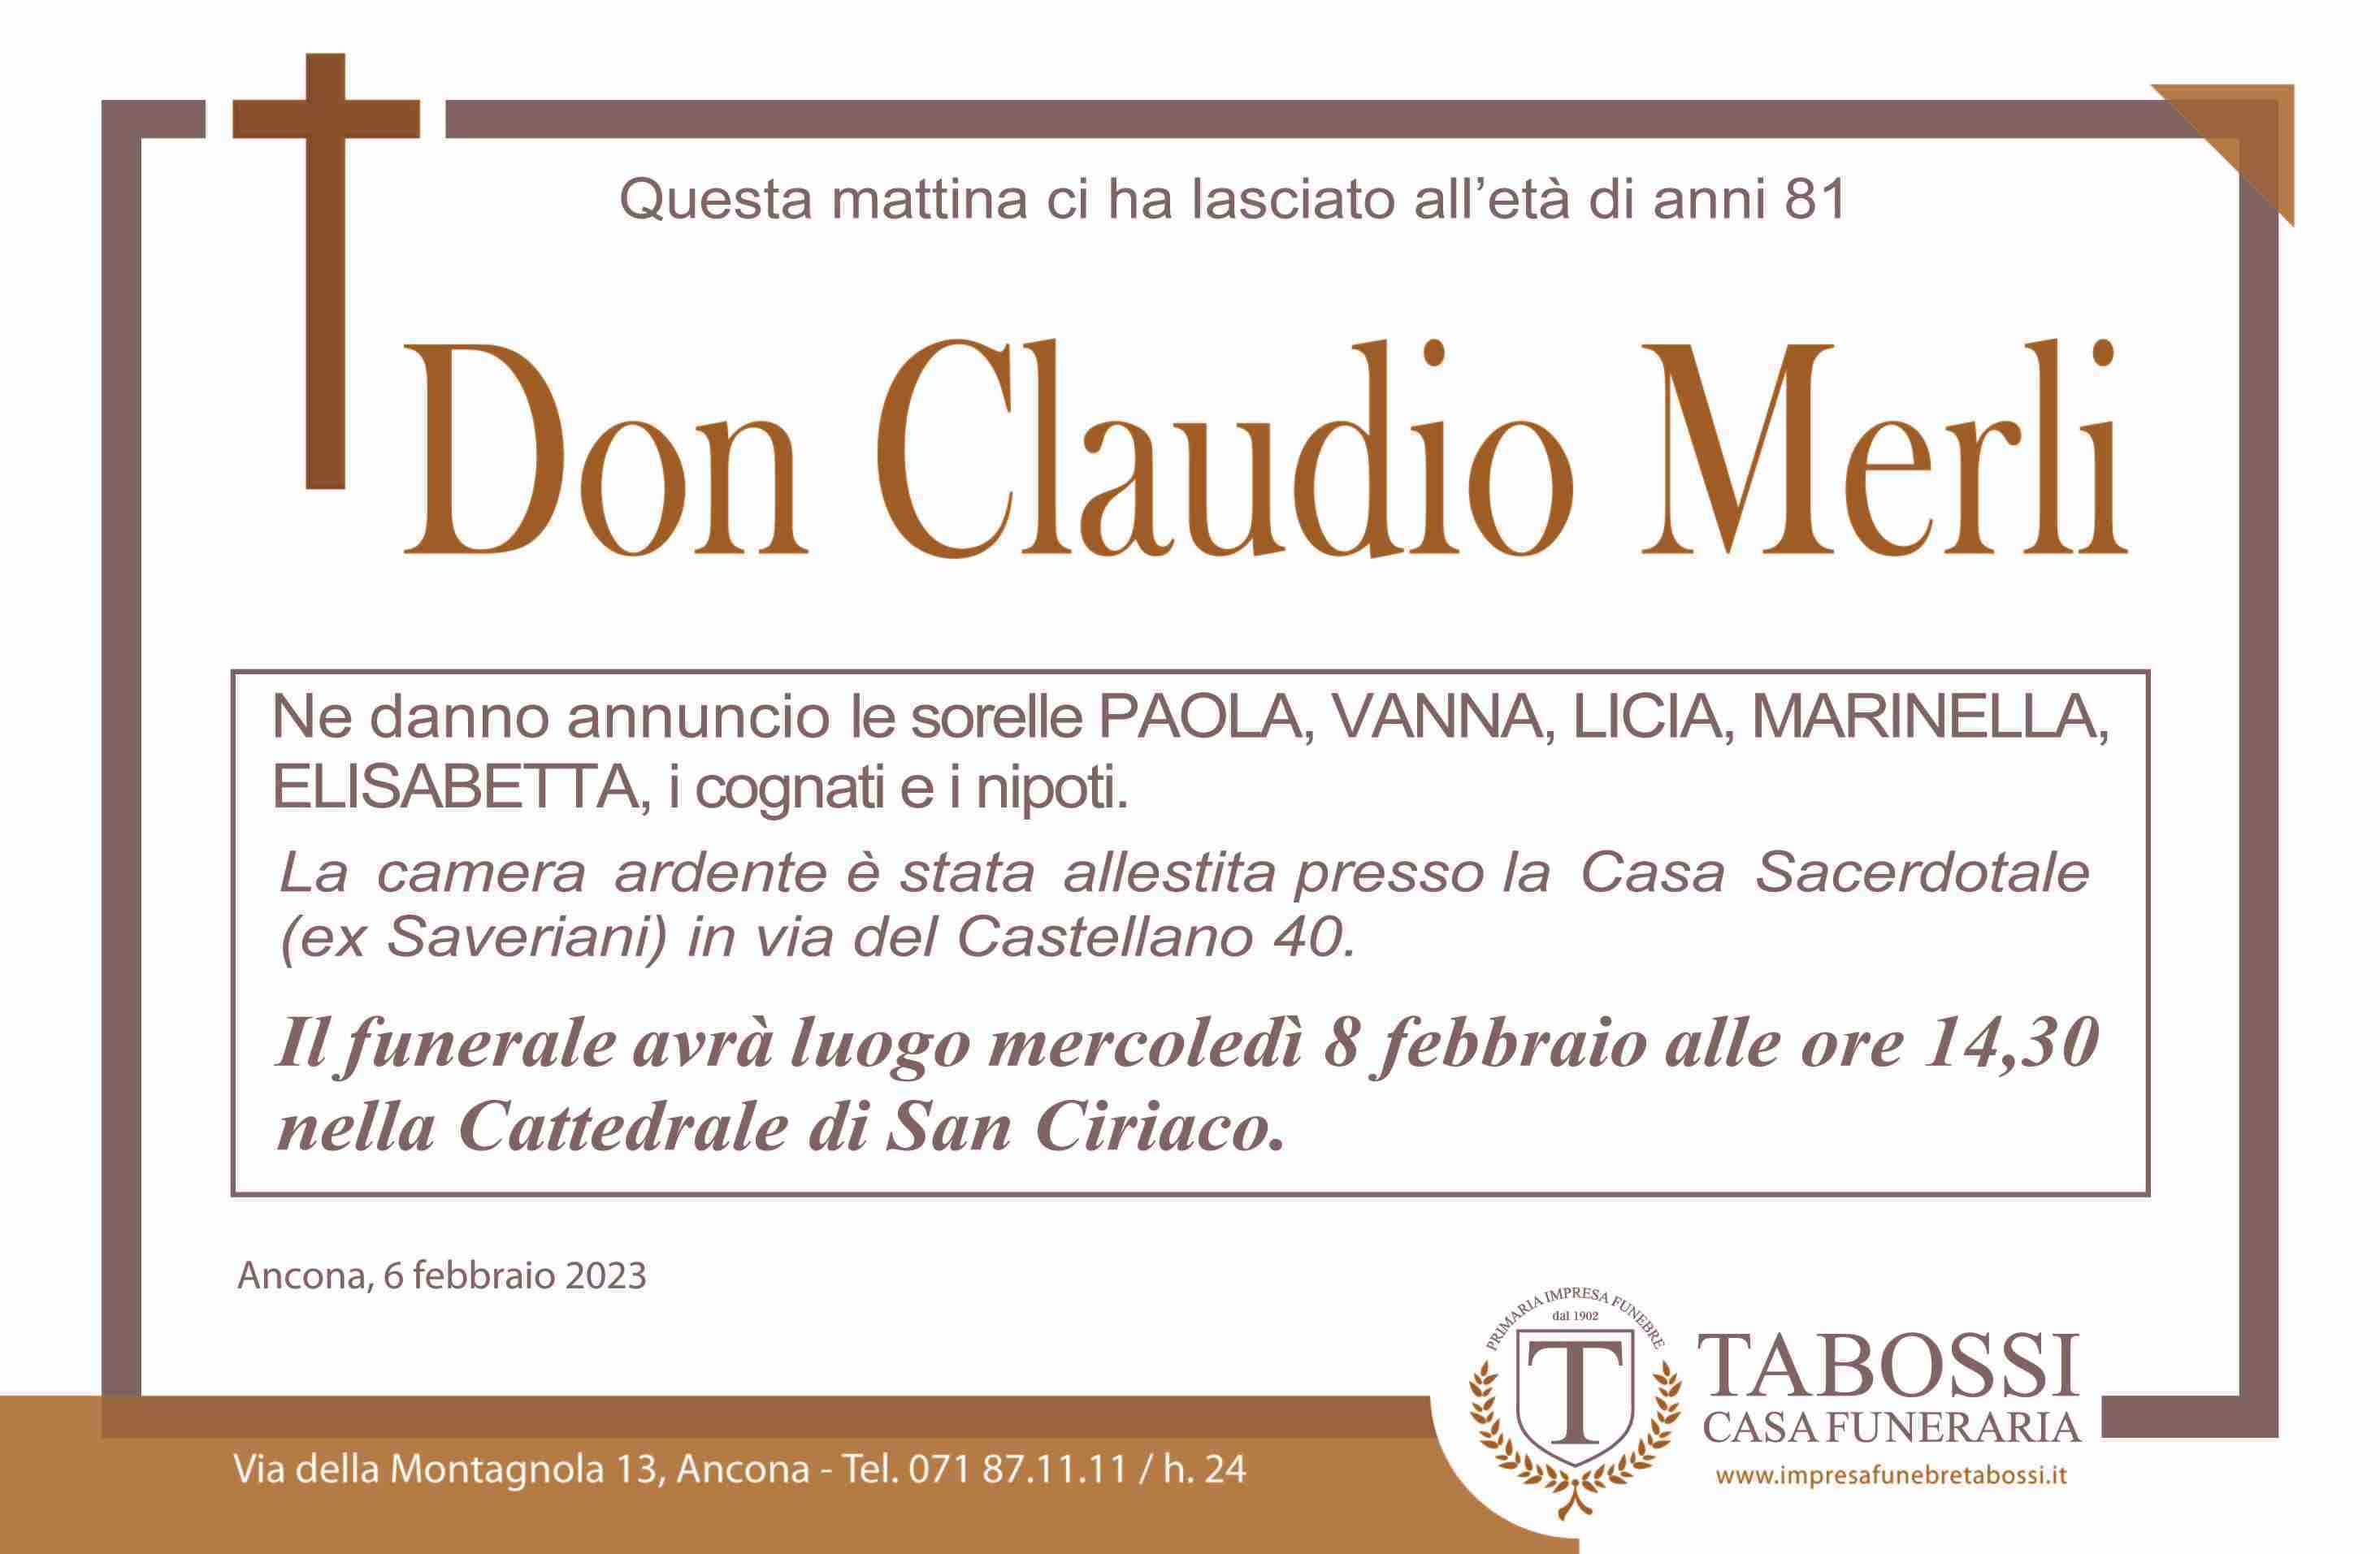 Don Claudio Merli